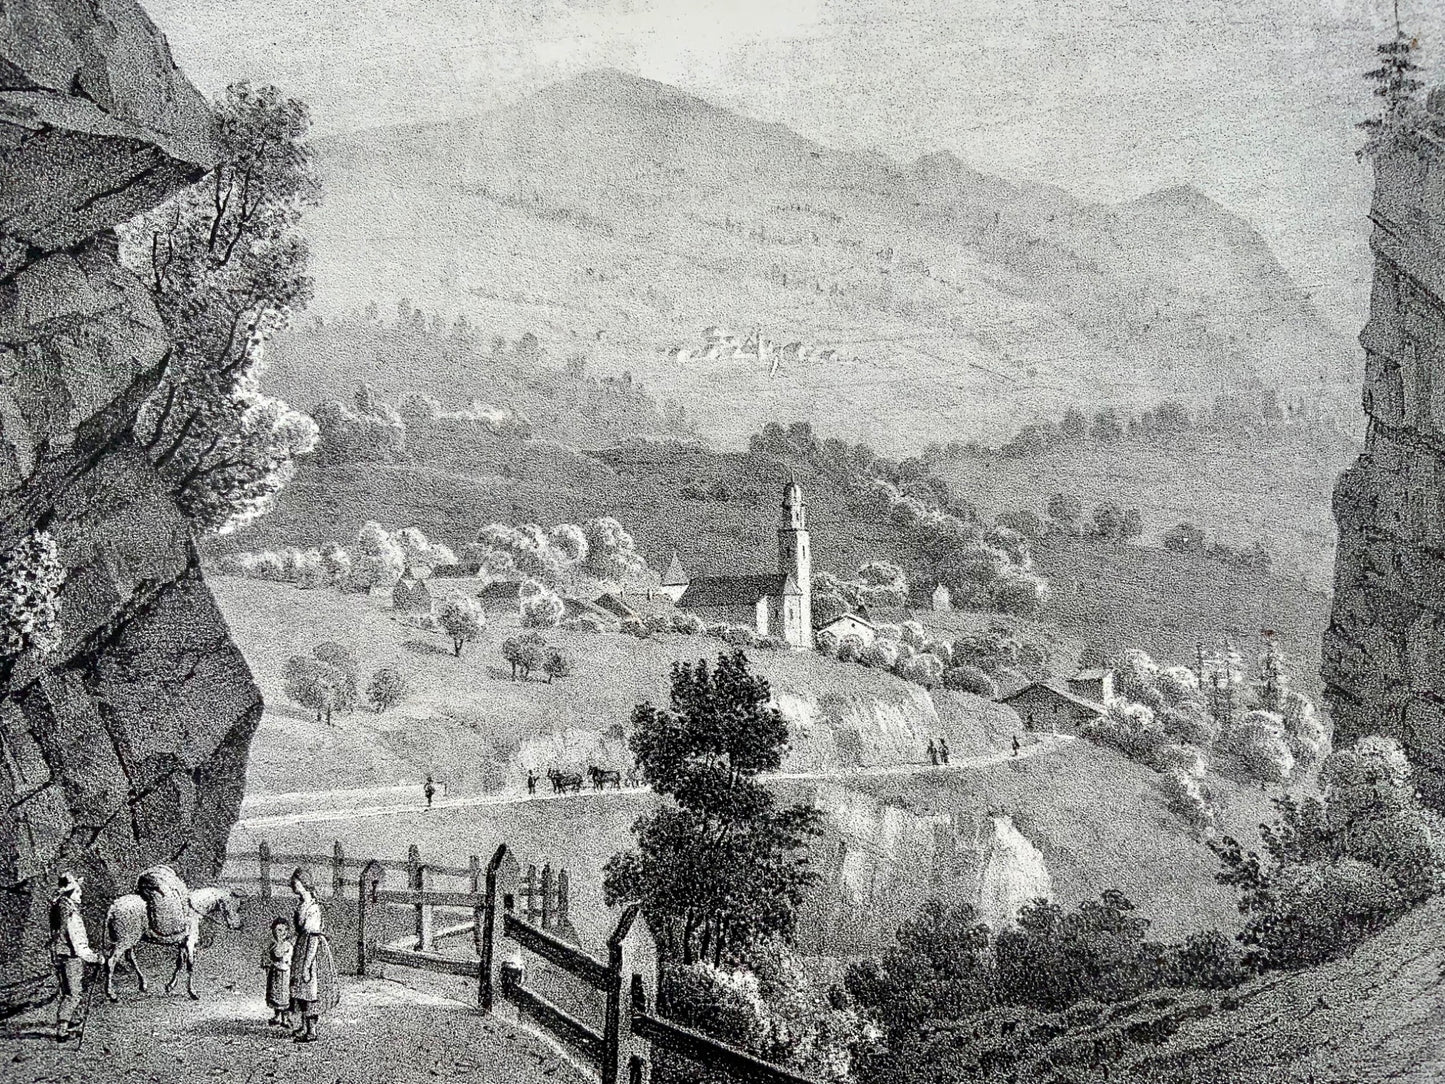 1838 Zillis, Graubunden, Via Mala in Switzerland, early stone lithograph